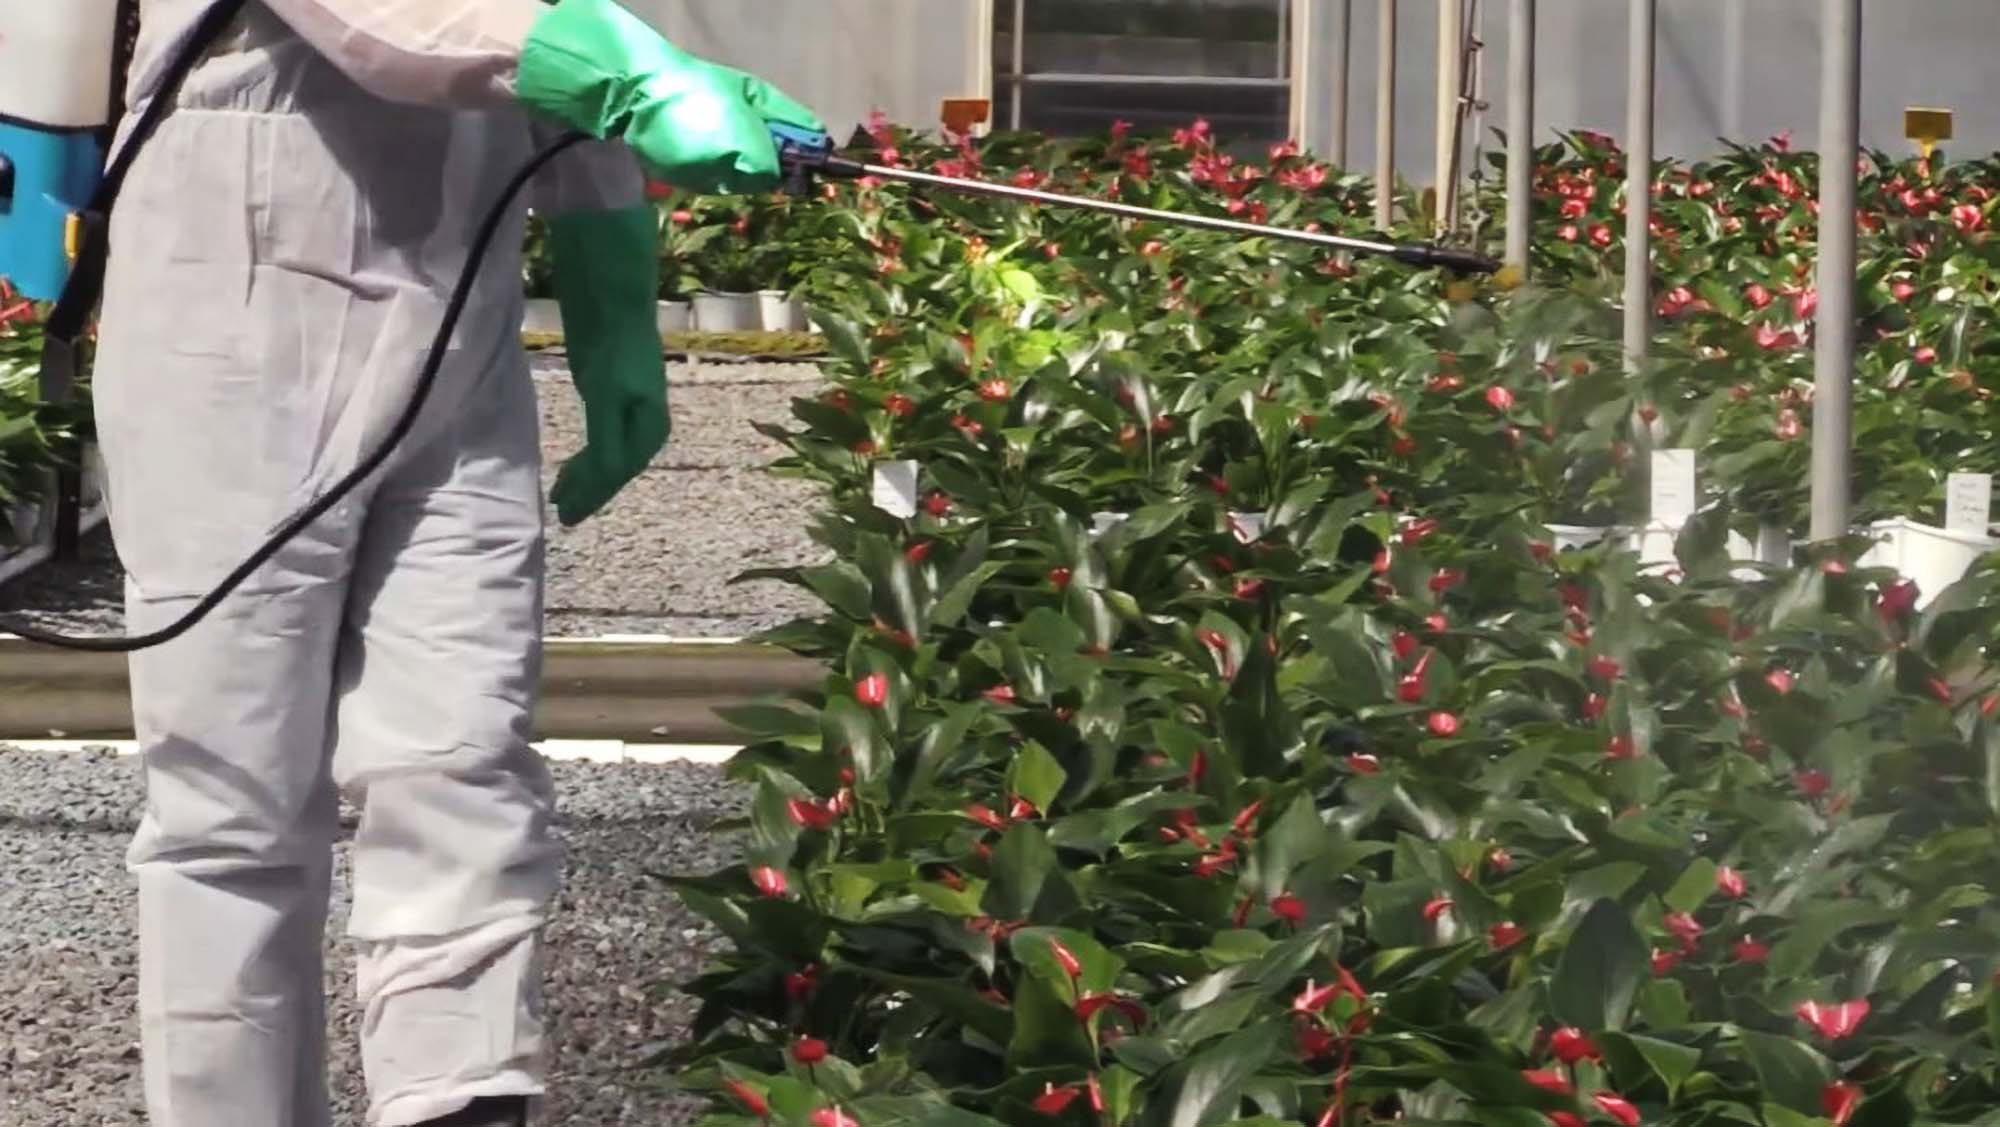 New York Beeswax Check Reveals Extensive Pesticide…